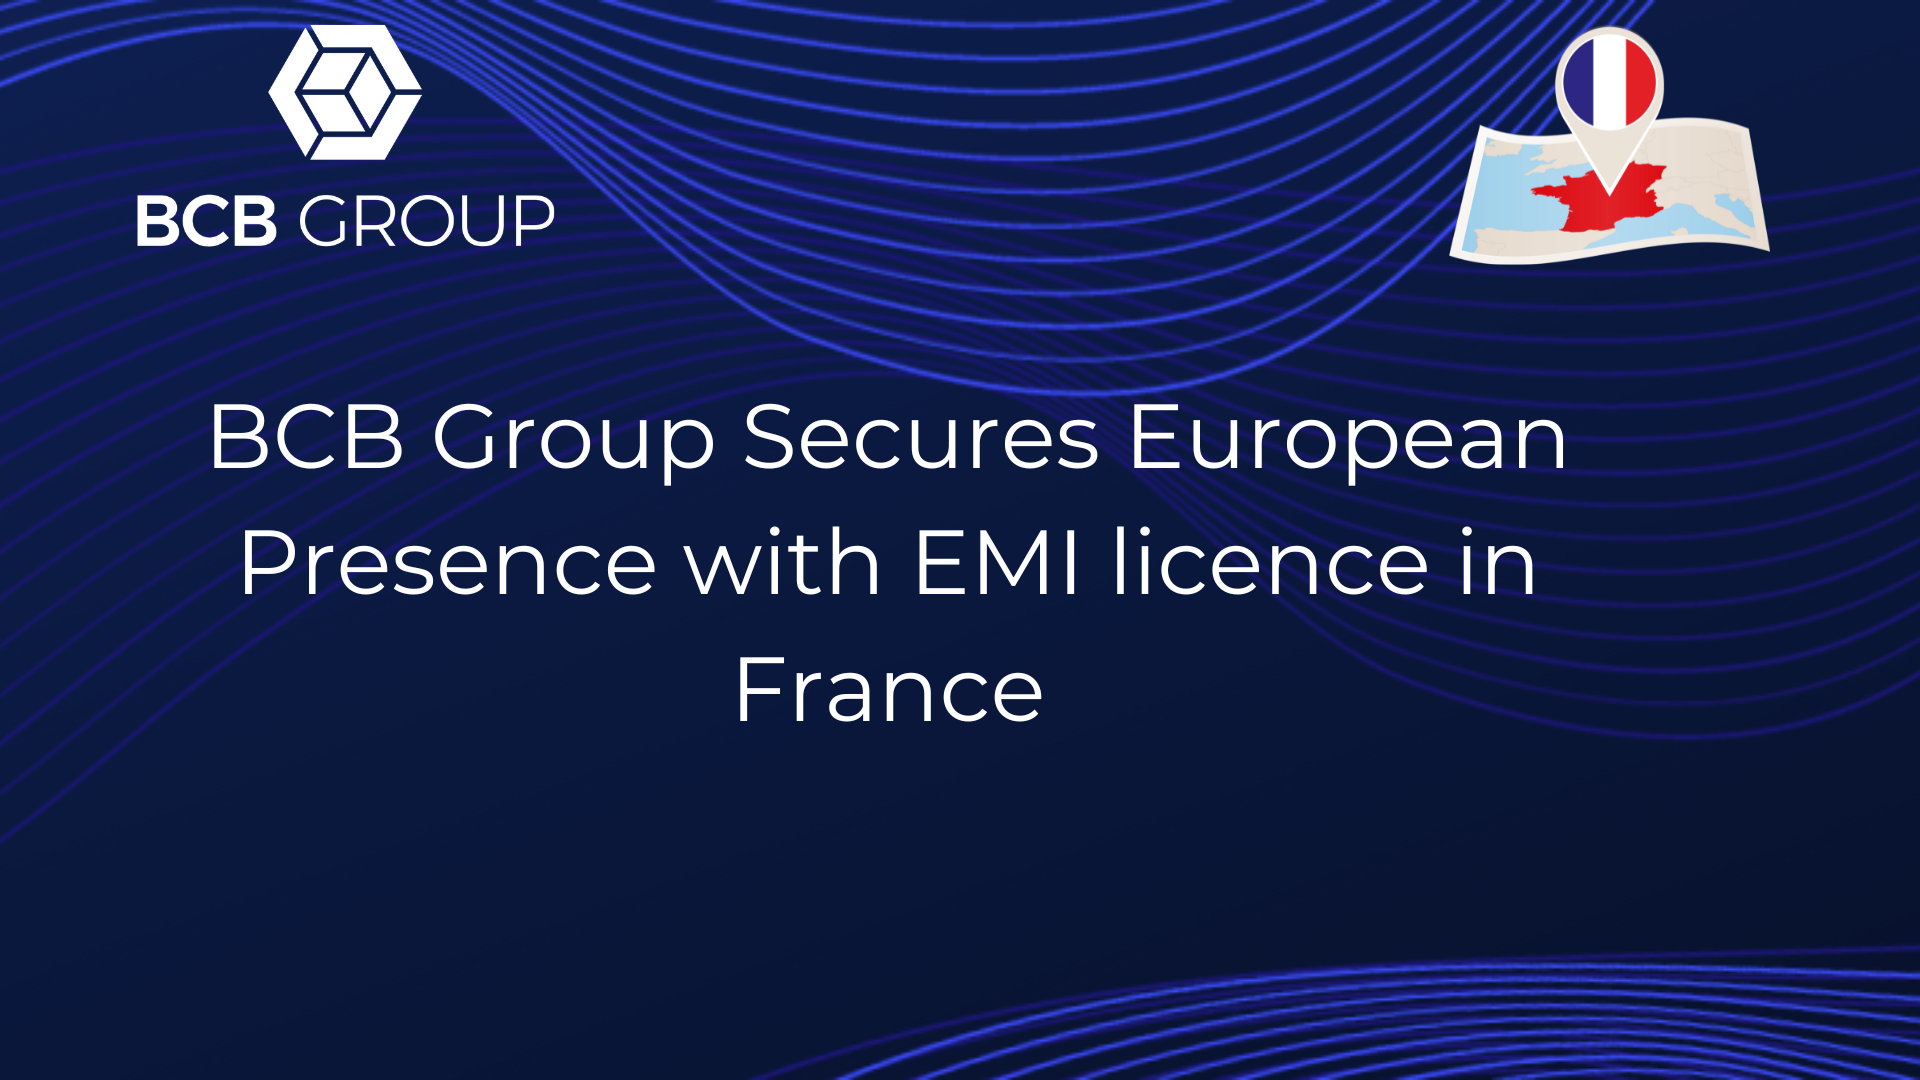 BCB Group Secures European Presence with EMI (Desktop Wallpaper)